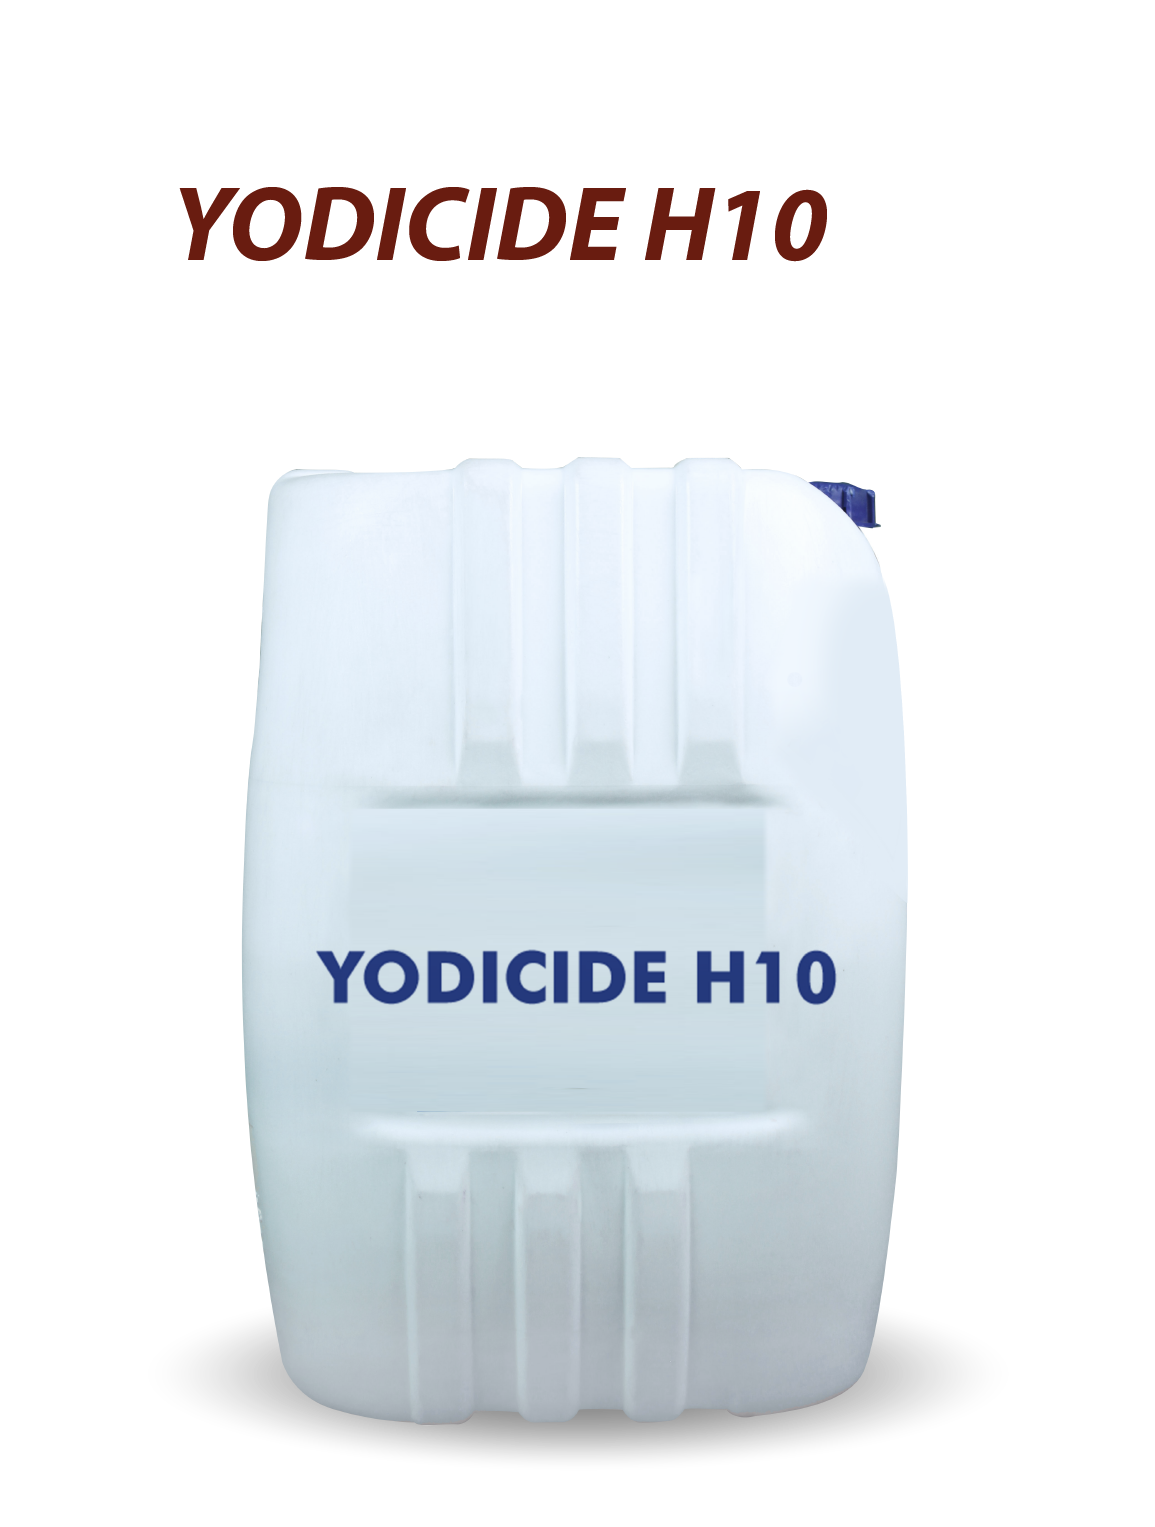 YODICIDE H10